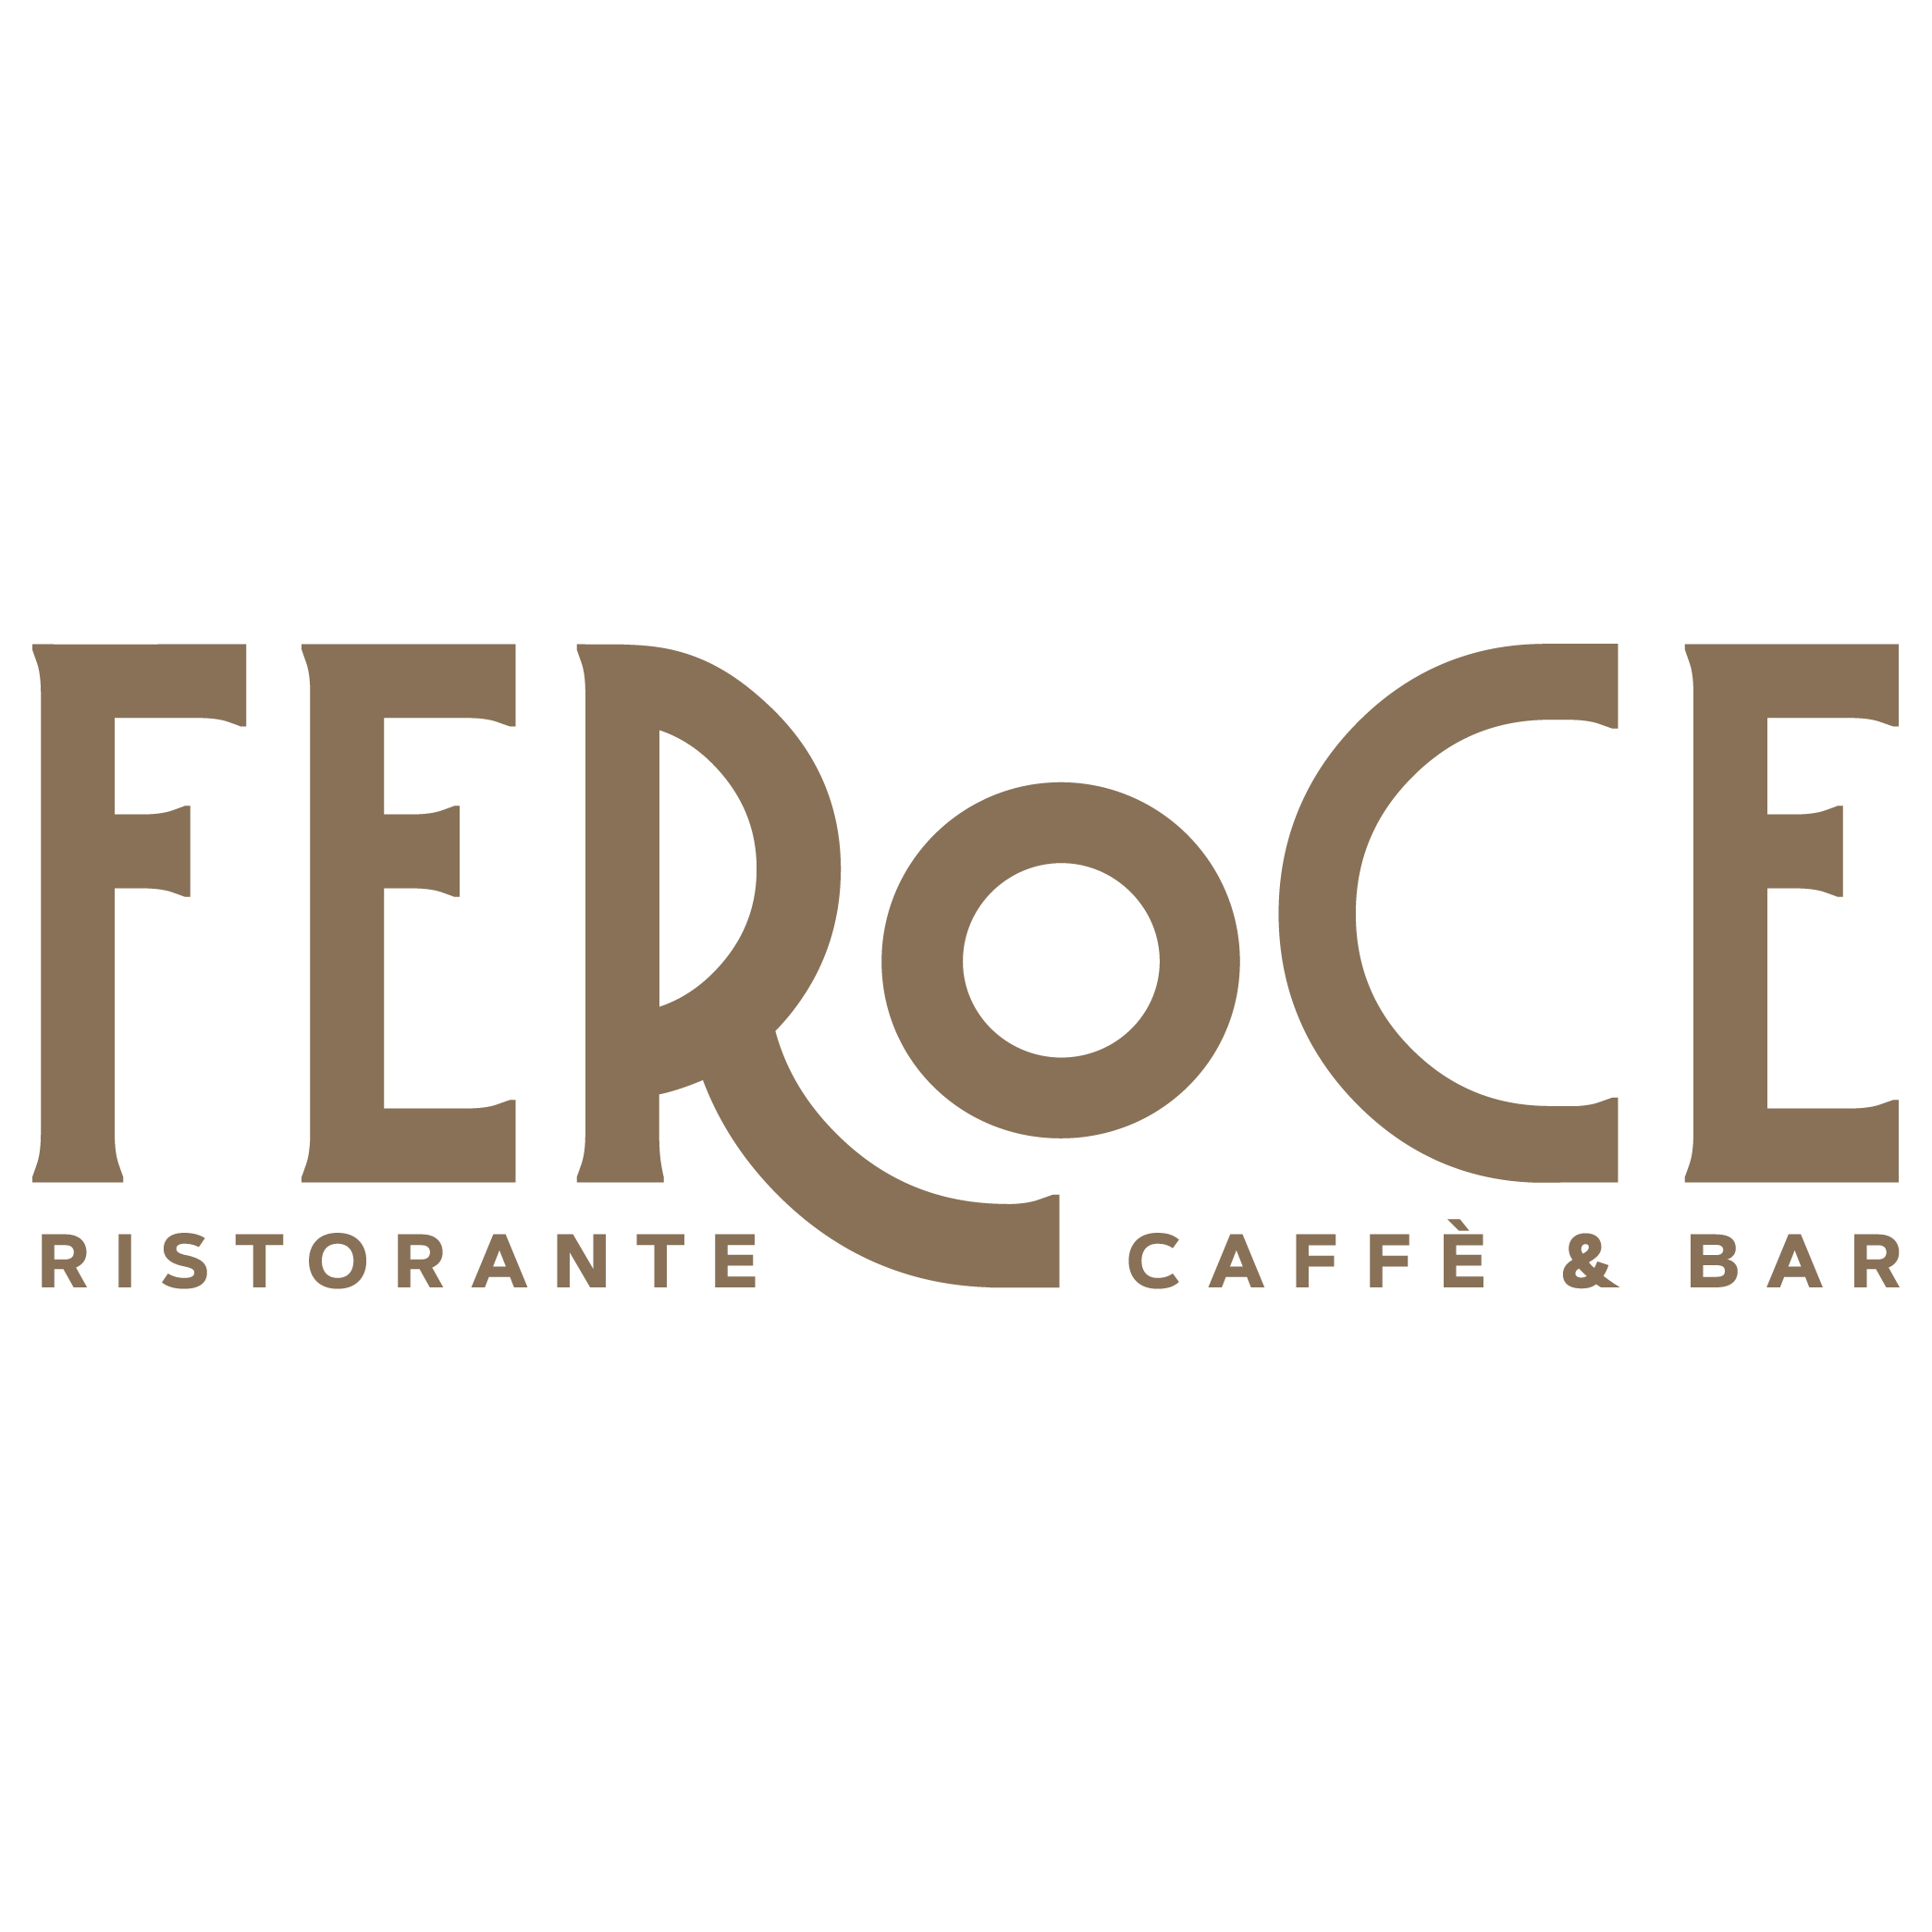 Feroce Ristorante - New York, NY 10001 - (212)888-1092 | ShowMeLocal.com